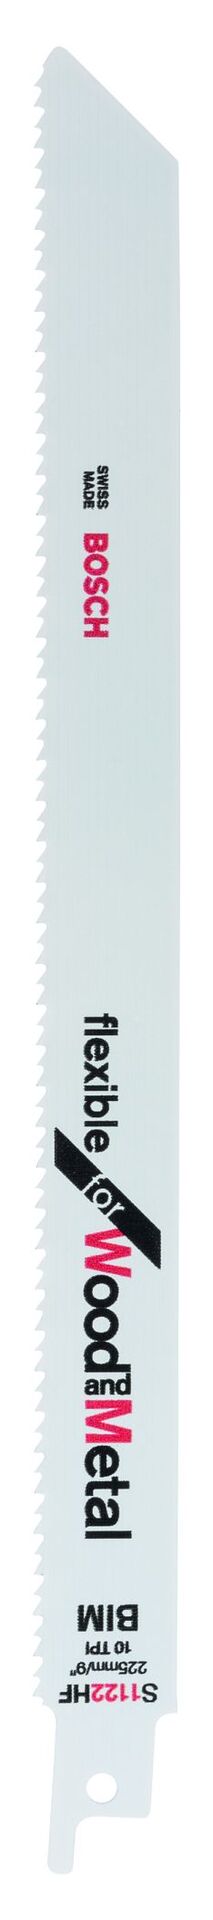 Säbelsägeblatt S 1122 HF, Flexible für Holz und Metal, 2er-Pack